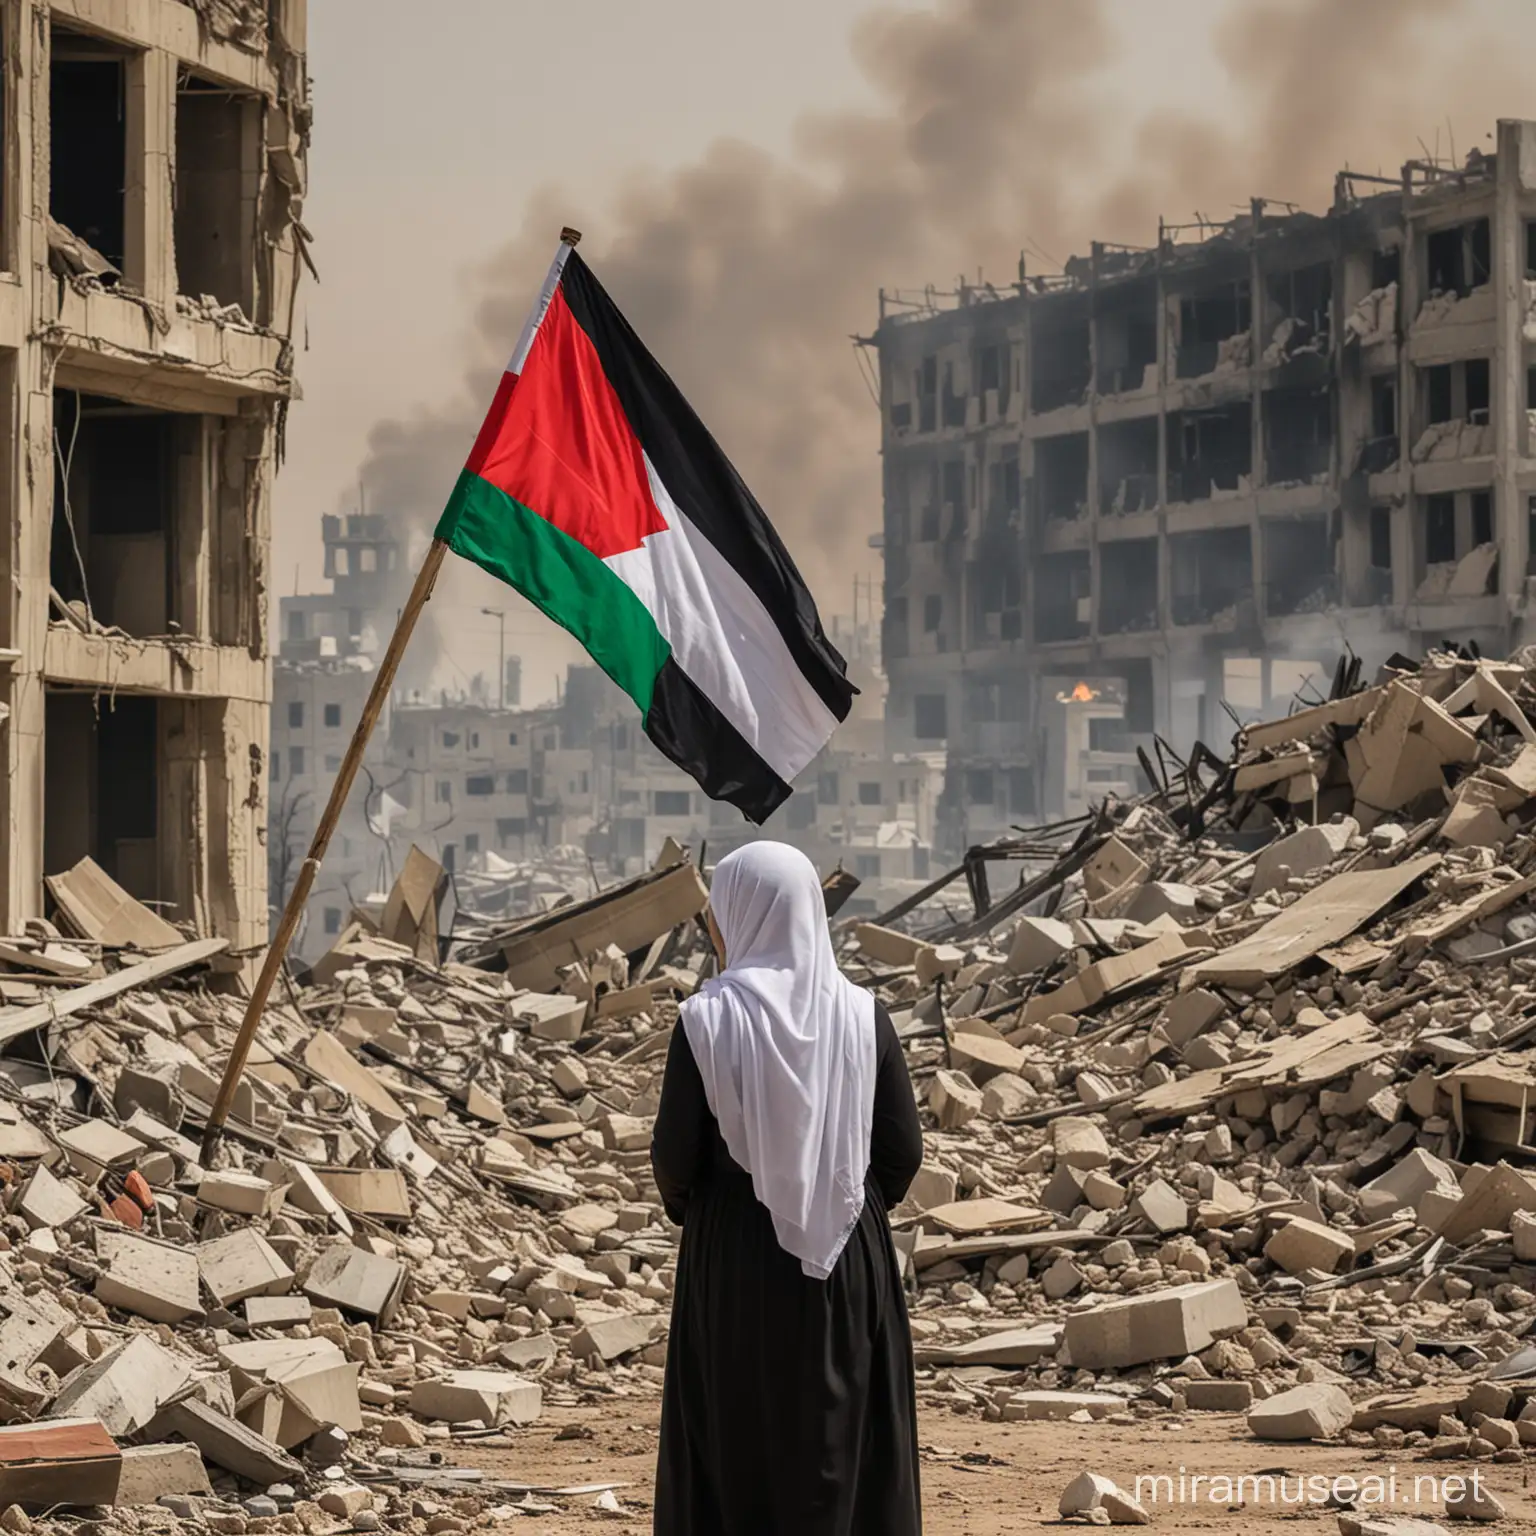 Fofo perempuan asal palestina dengan pakaian muslim,sedang tertunduk lemas dengan tangan memegang bendera palestina,dengan wajah bersedih dan menghadap pandangan,
Latar reruntuhan bangunan yang hancur
Efek puing puing bangunan,dan ada api di mana mana